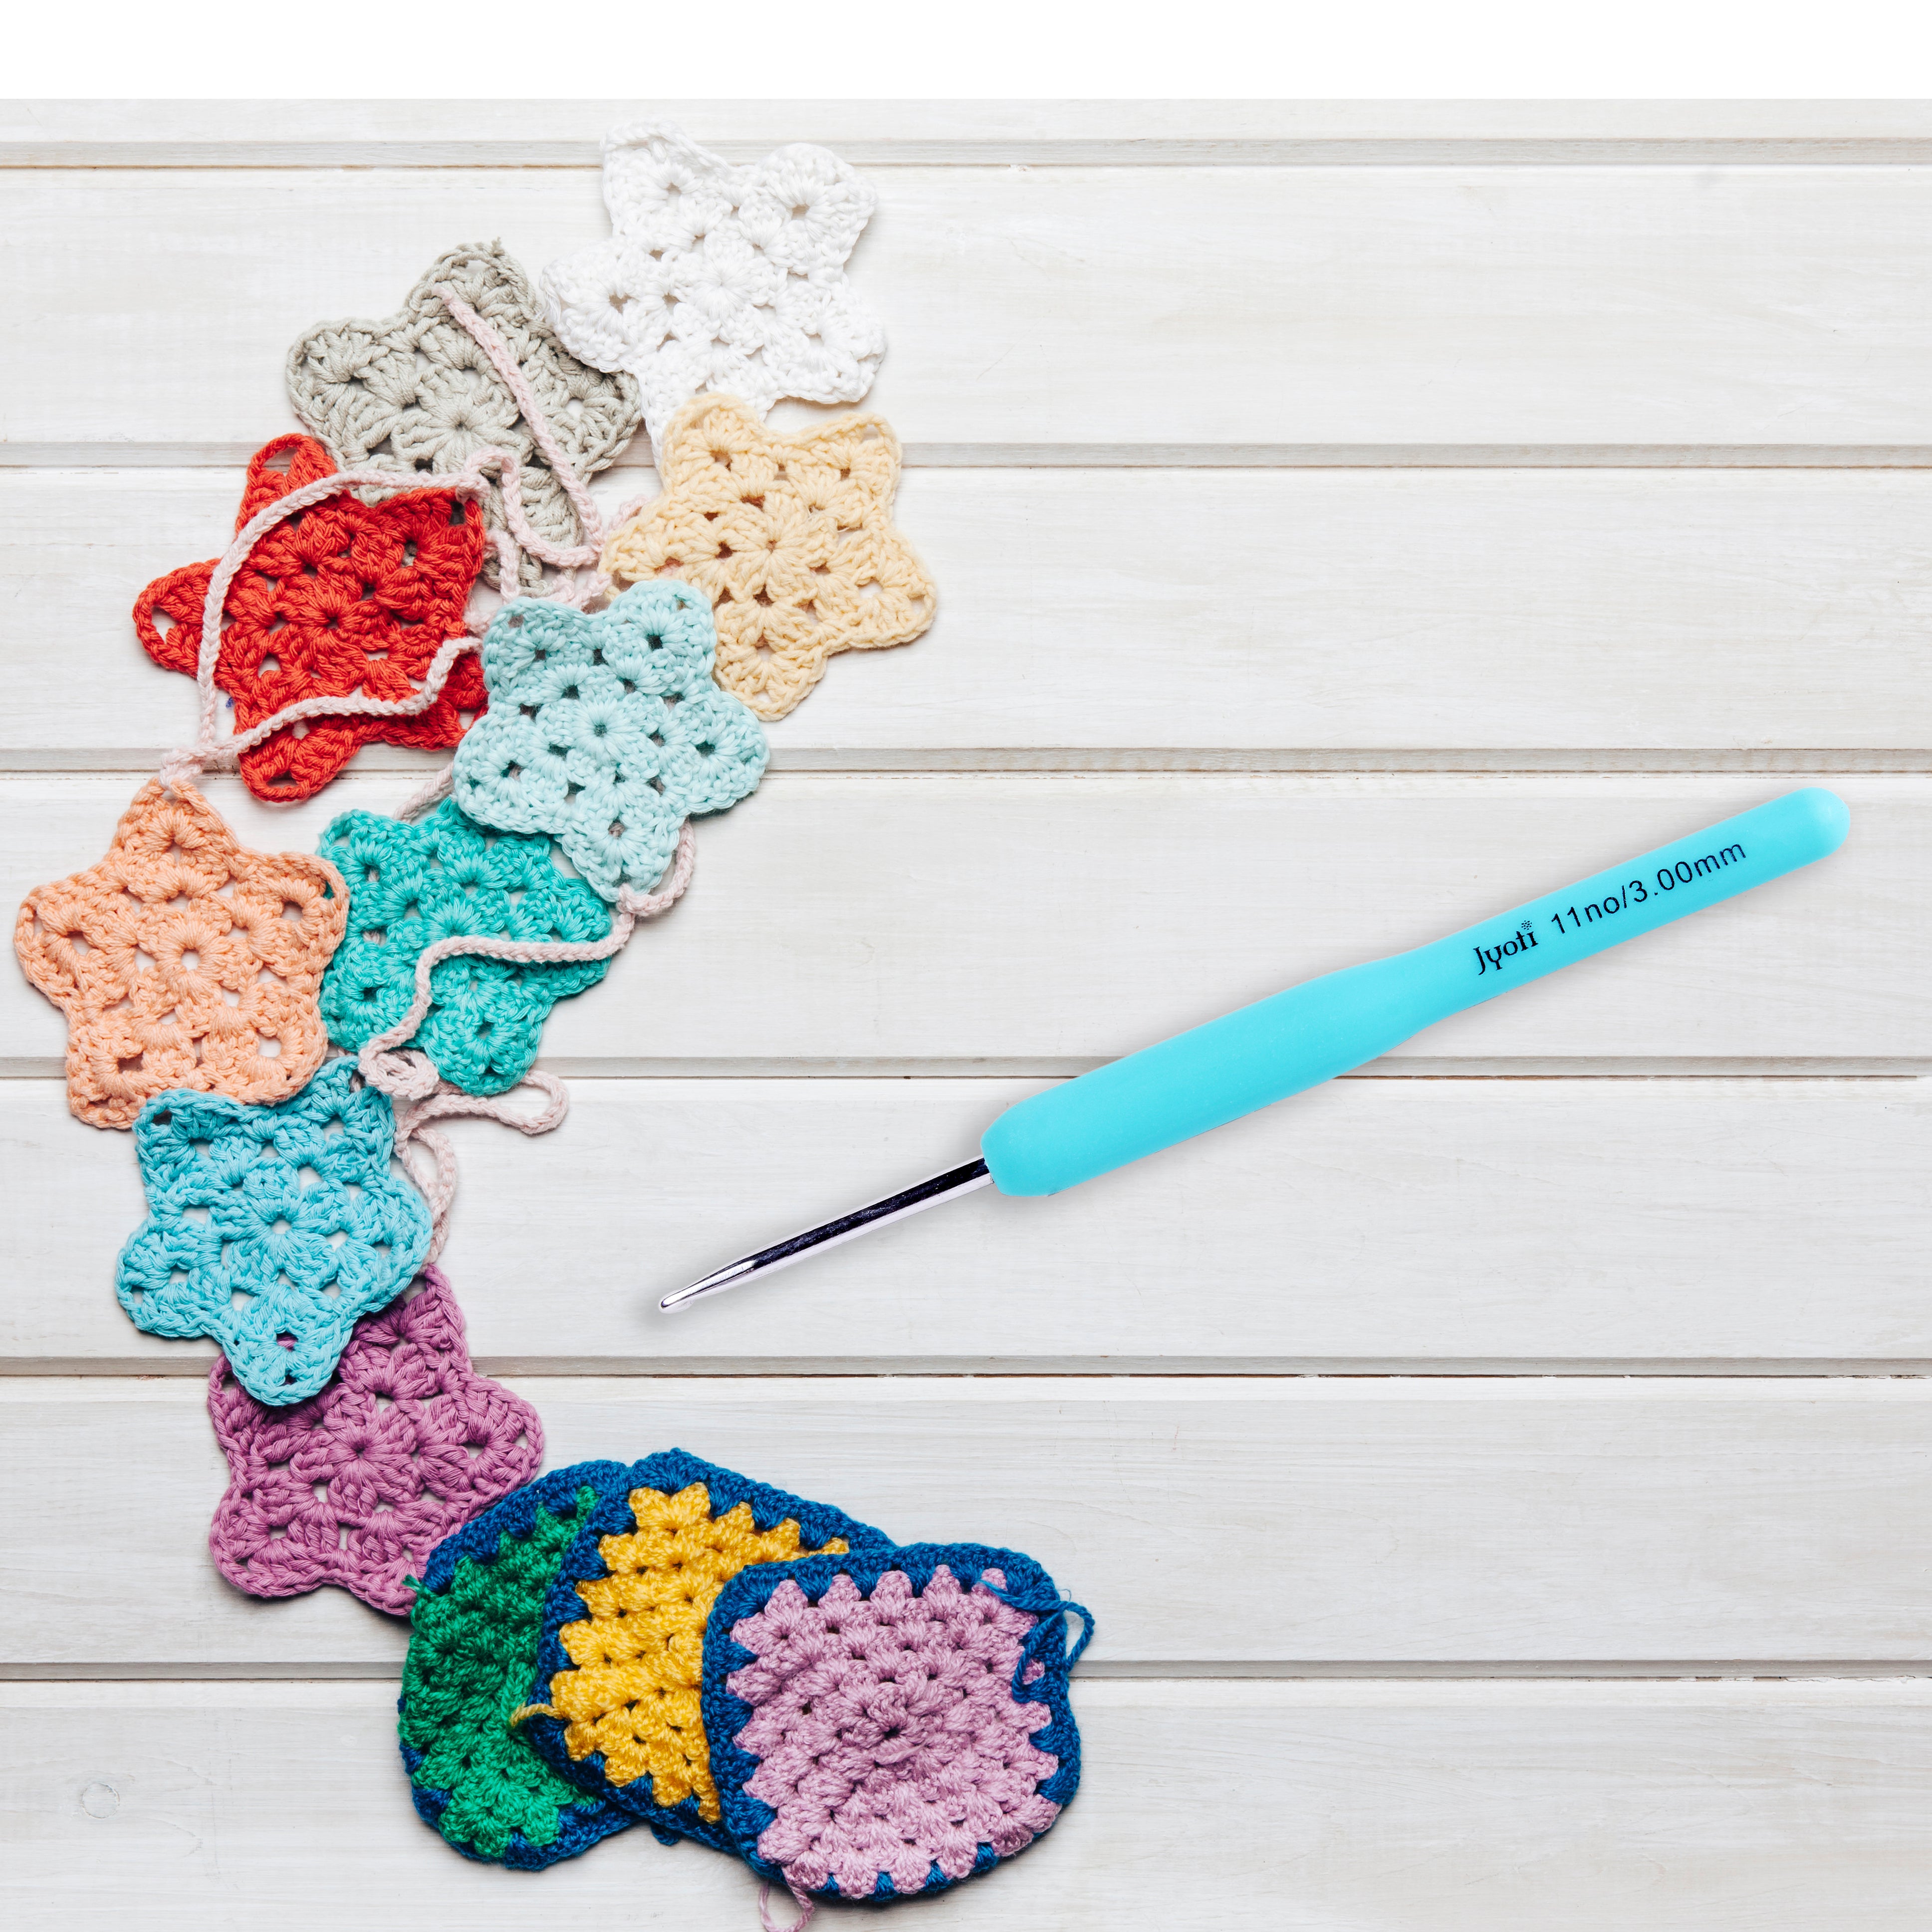 Crochet Hooks For Wool Work 4mm 1pc – Itsy Bitsy